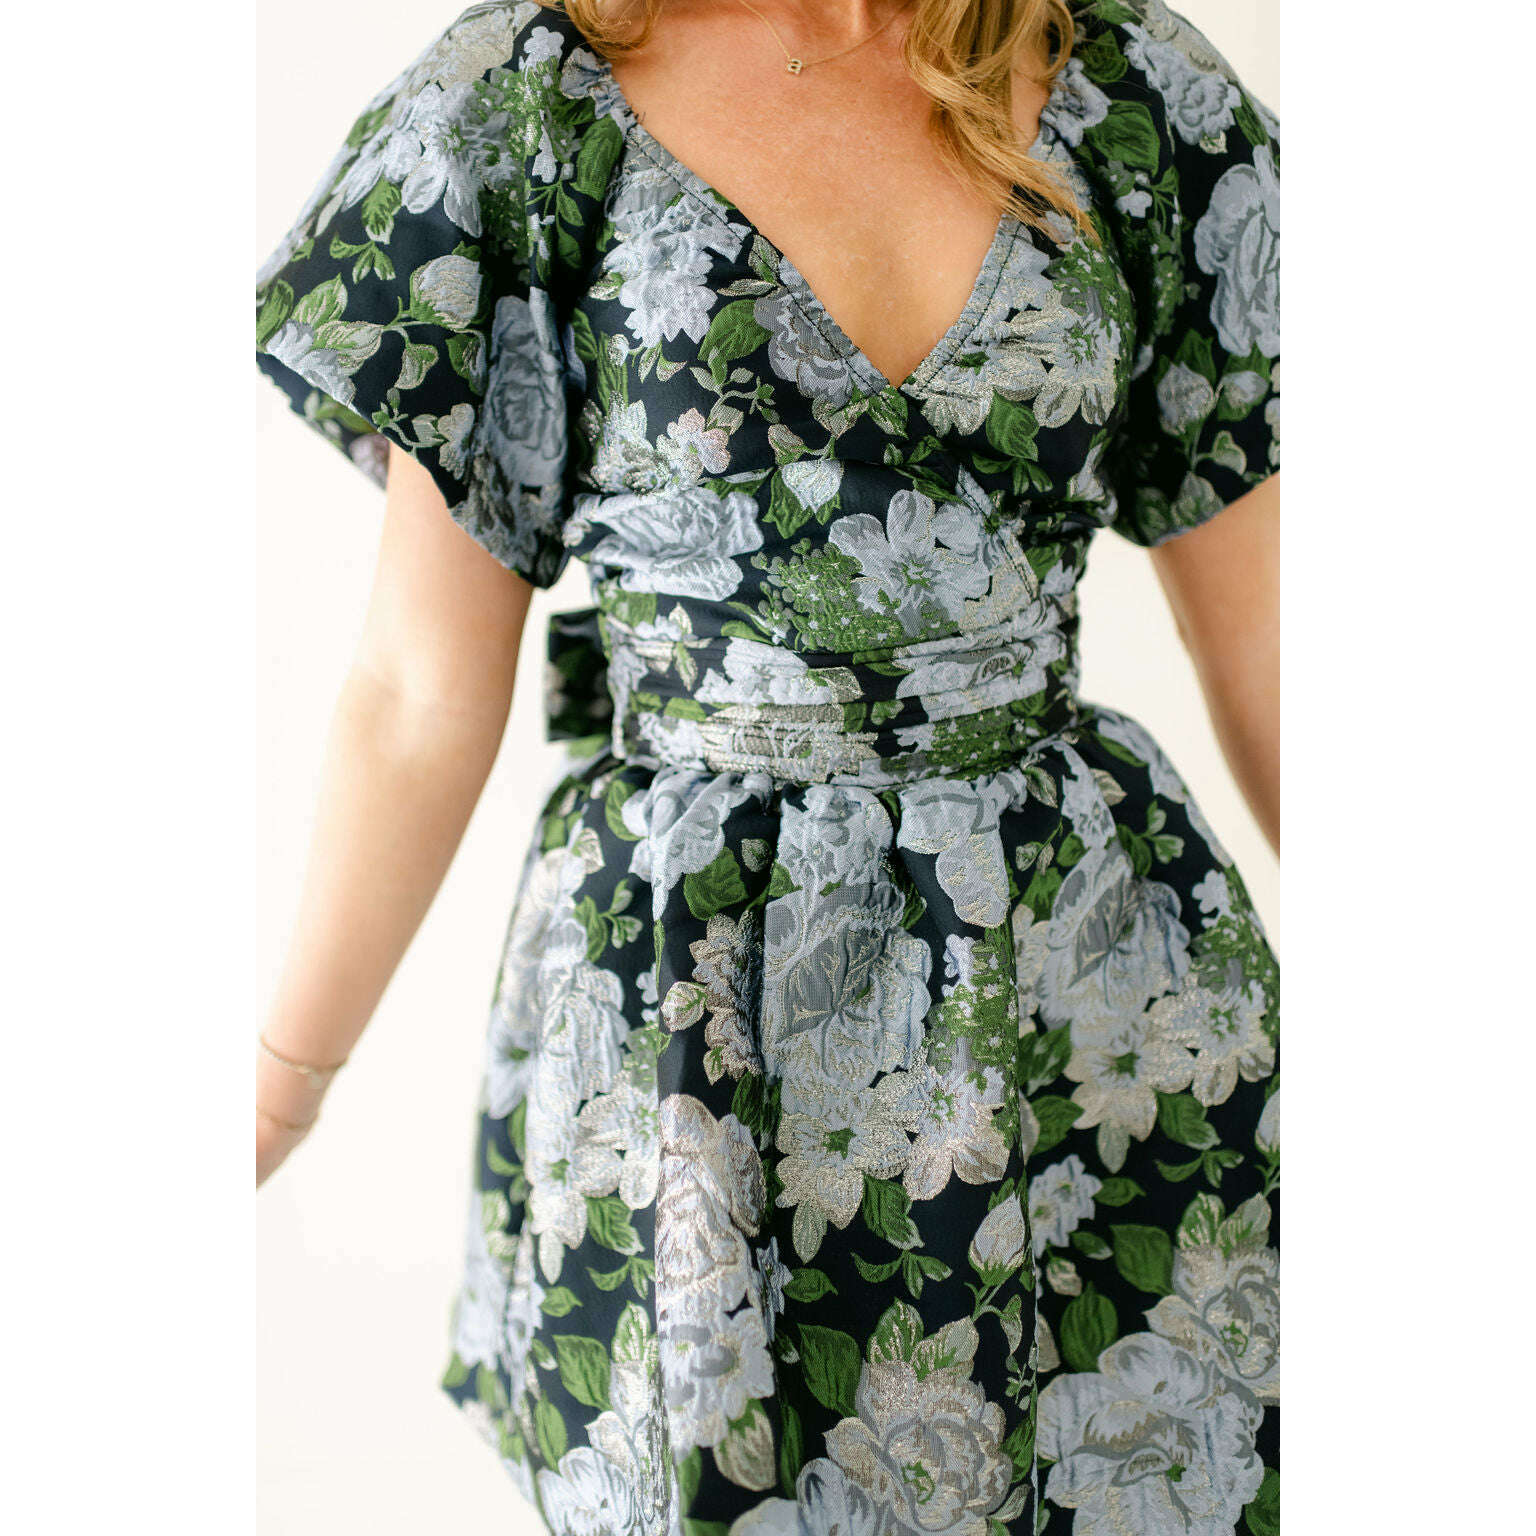 8.28 Boutique:Meet Me in Santorini,Meet in Santorini Shirley Dress,Dress